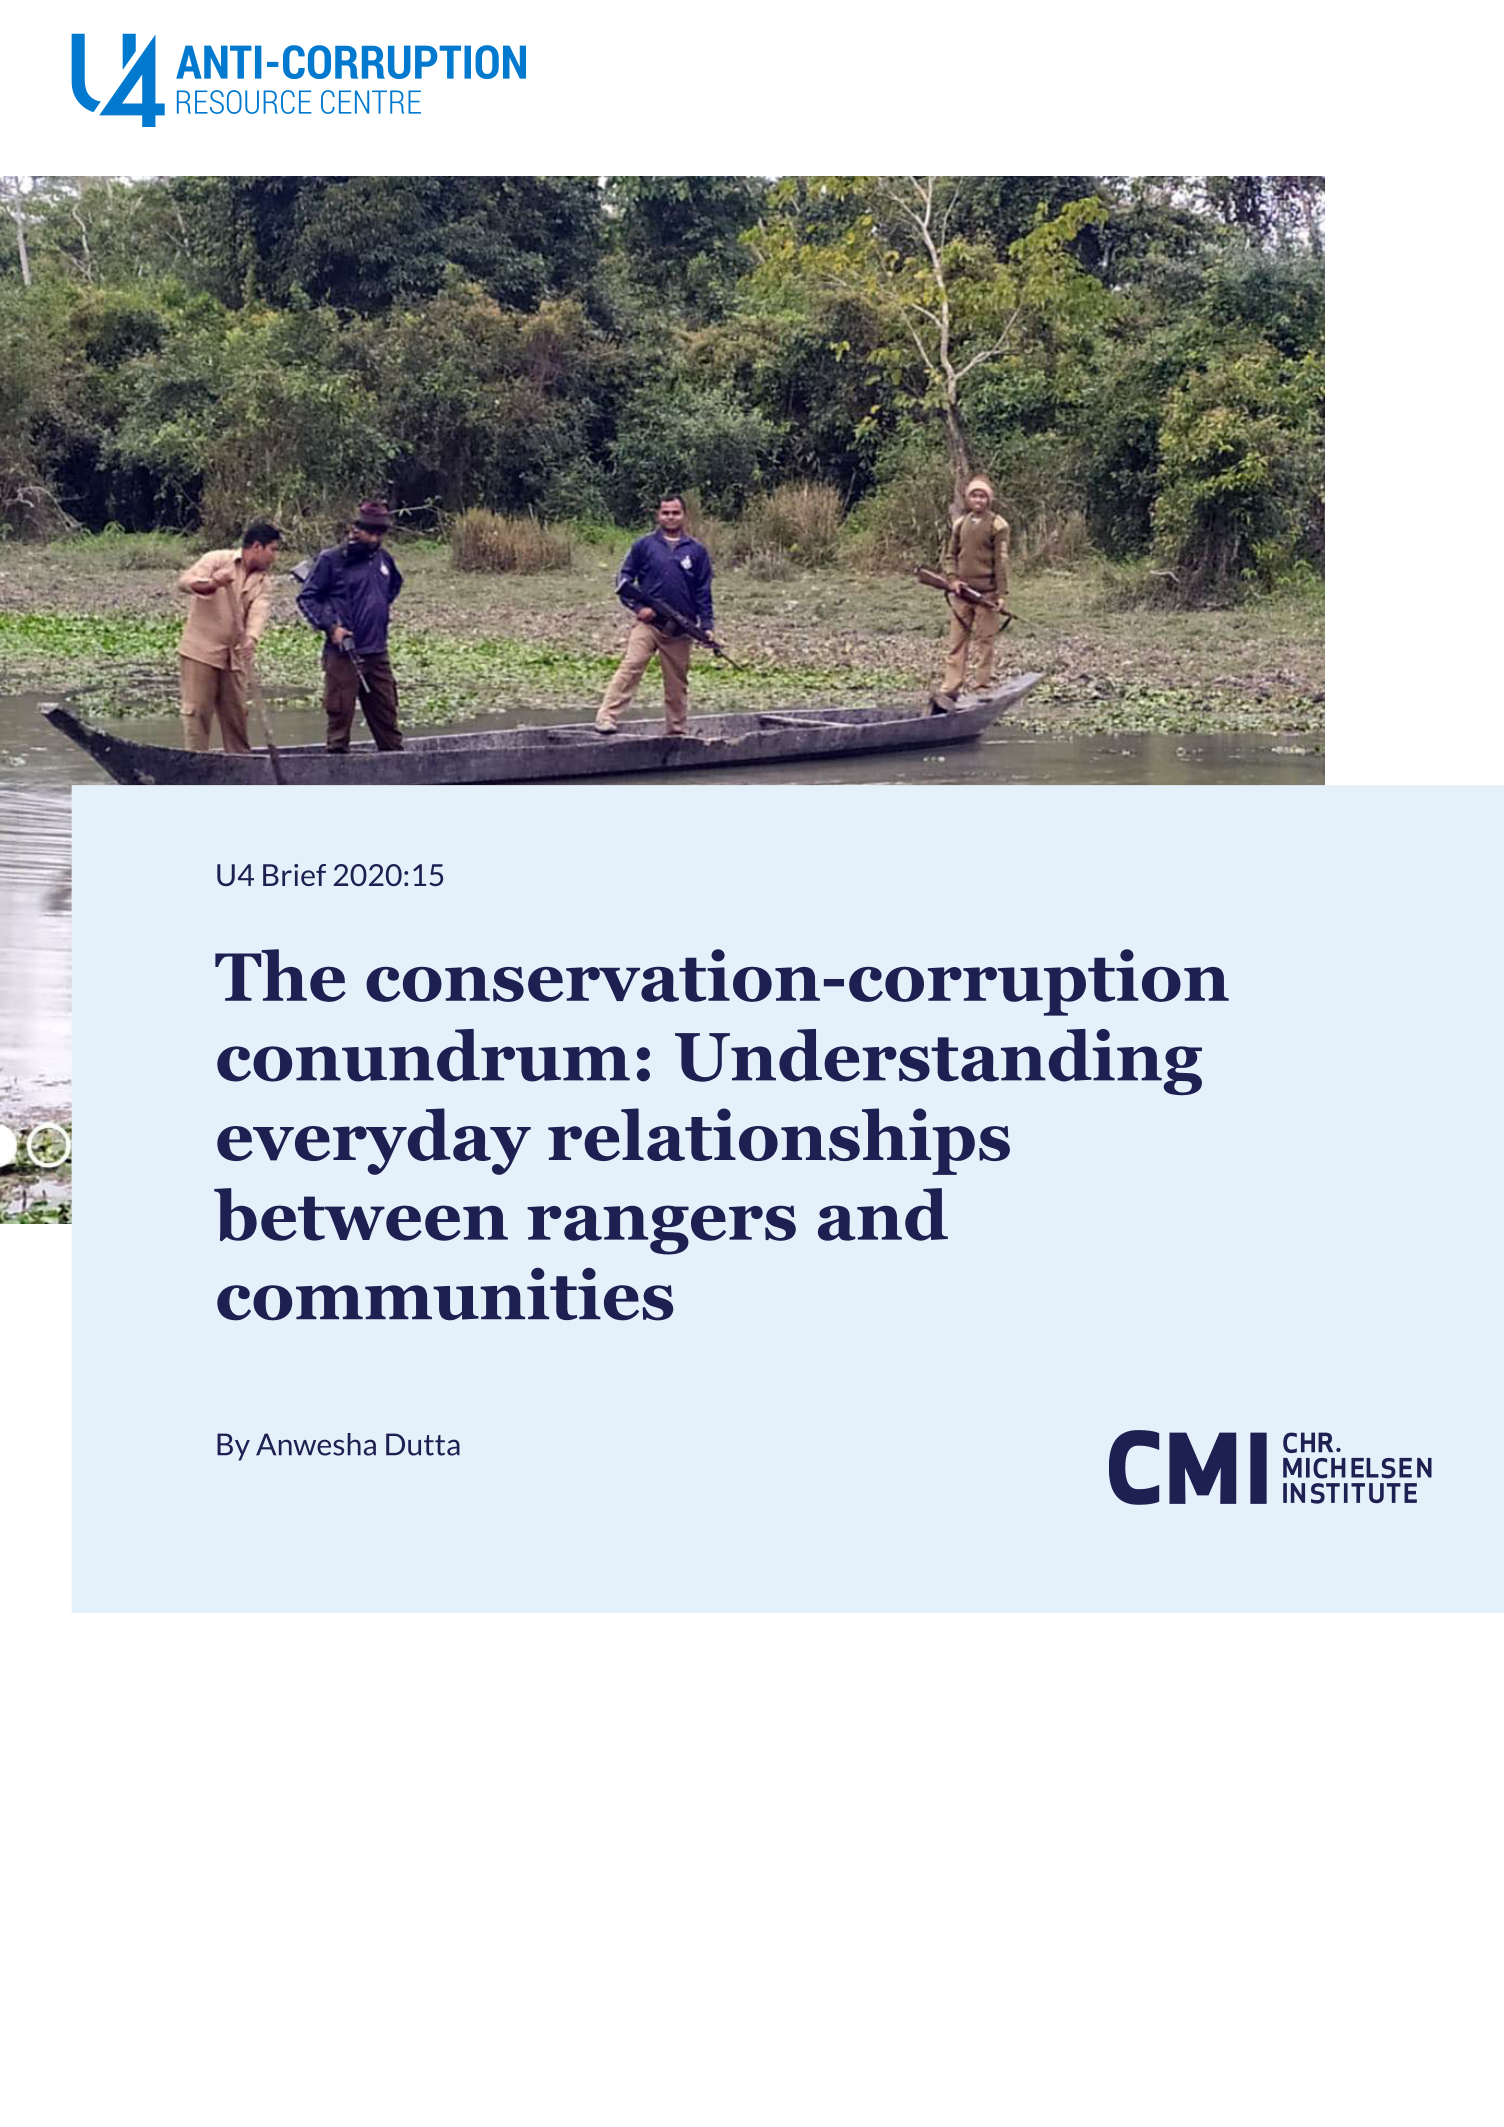 The conservation-corruption conundrum: Understanding everyday relationships between rangers and communities